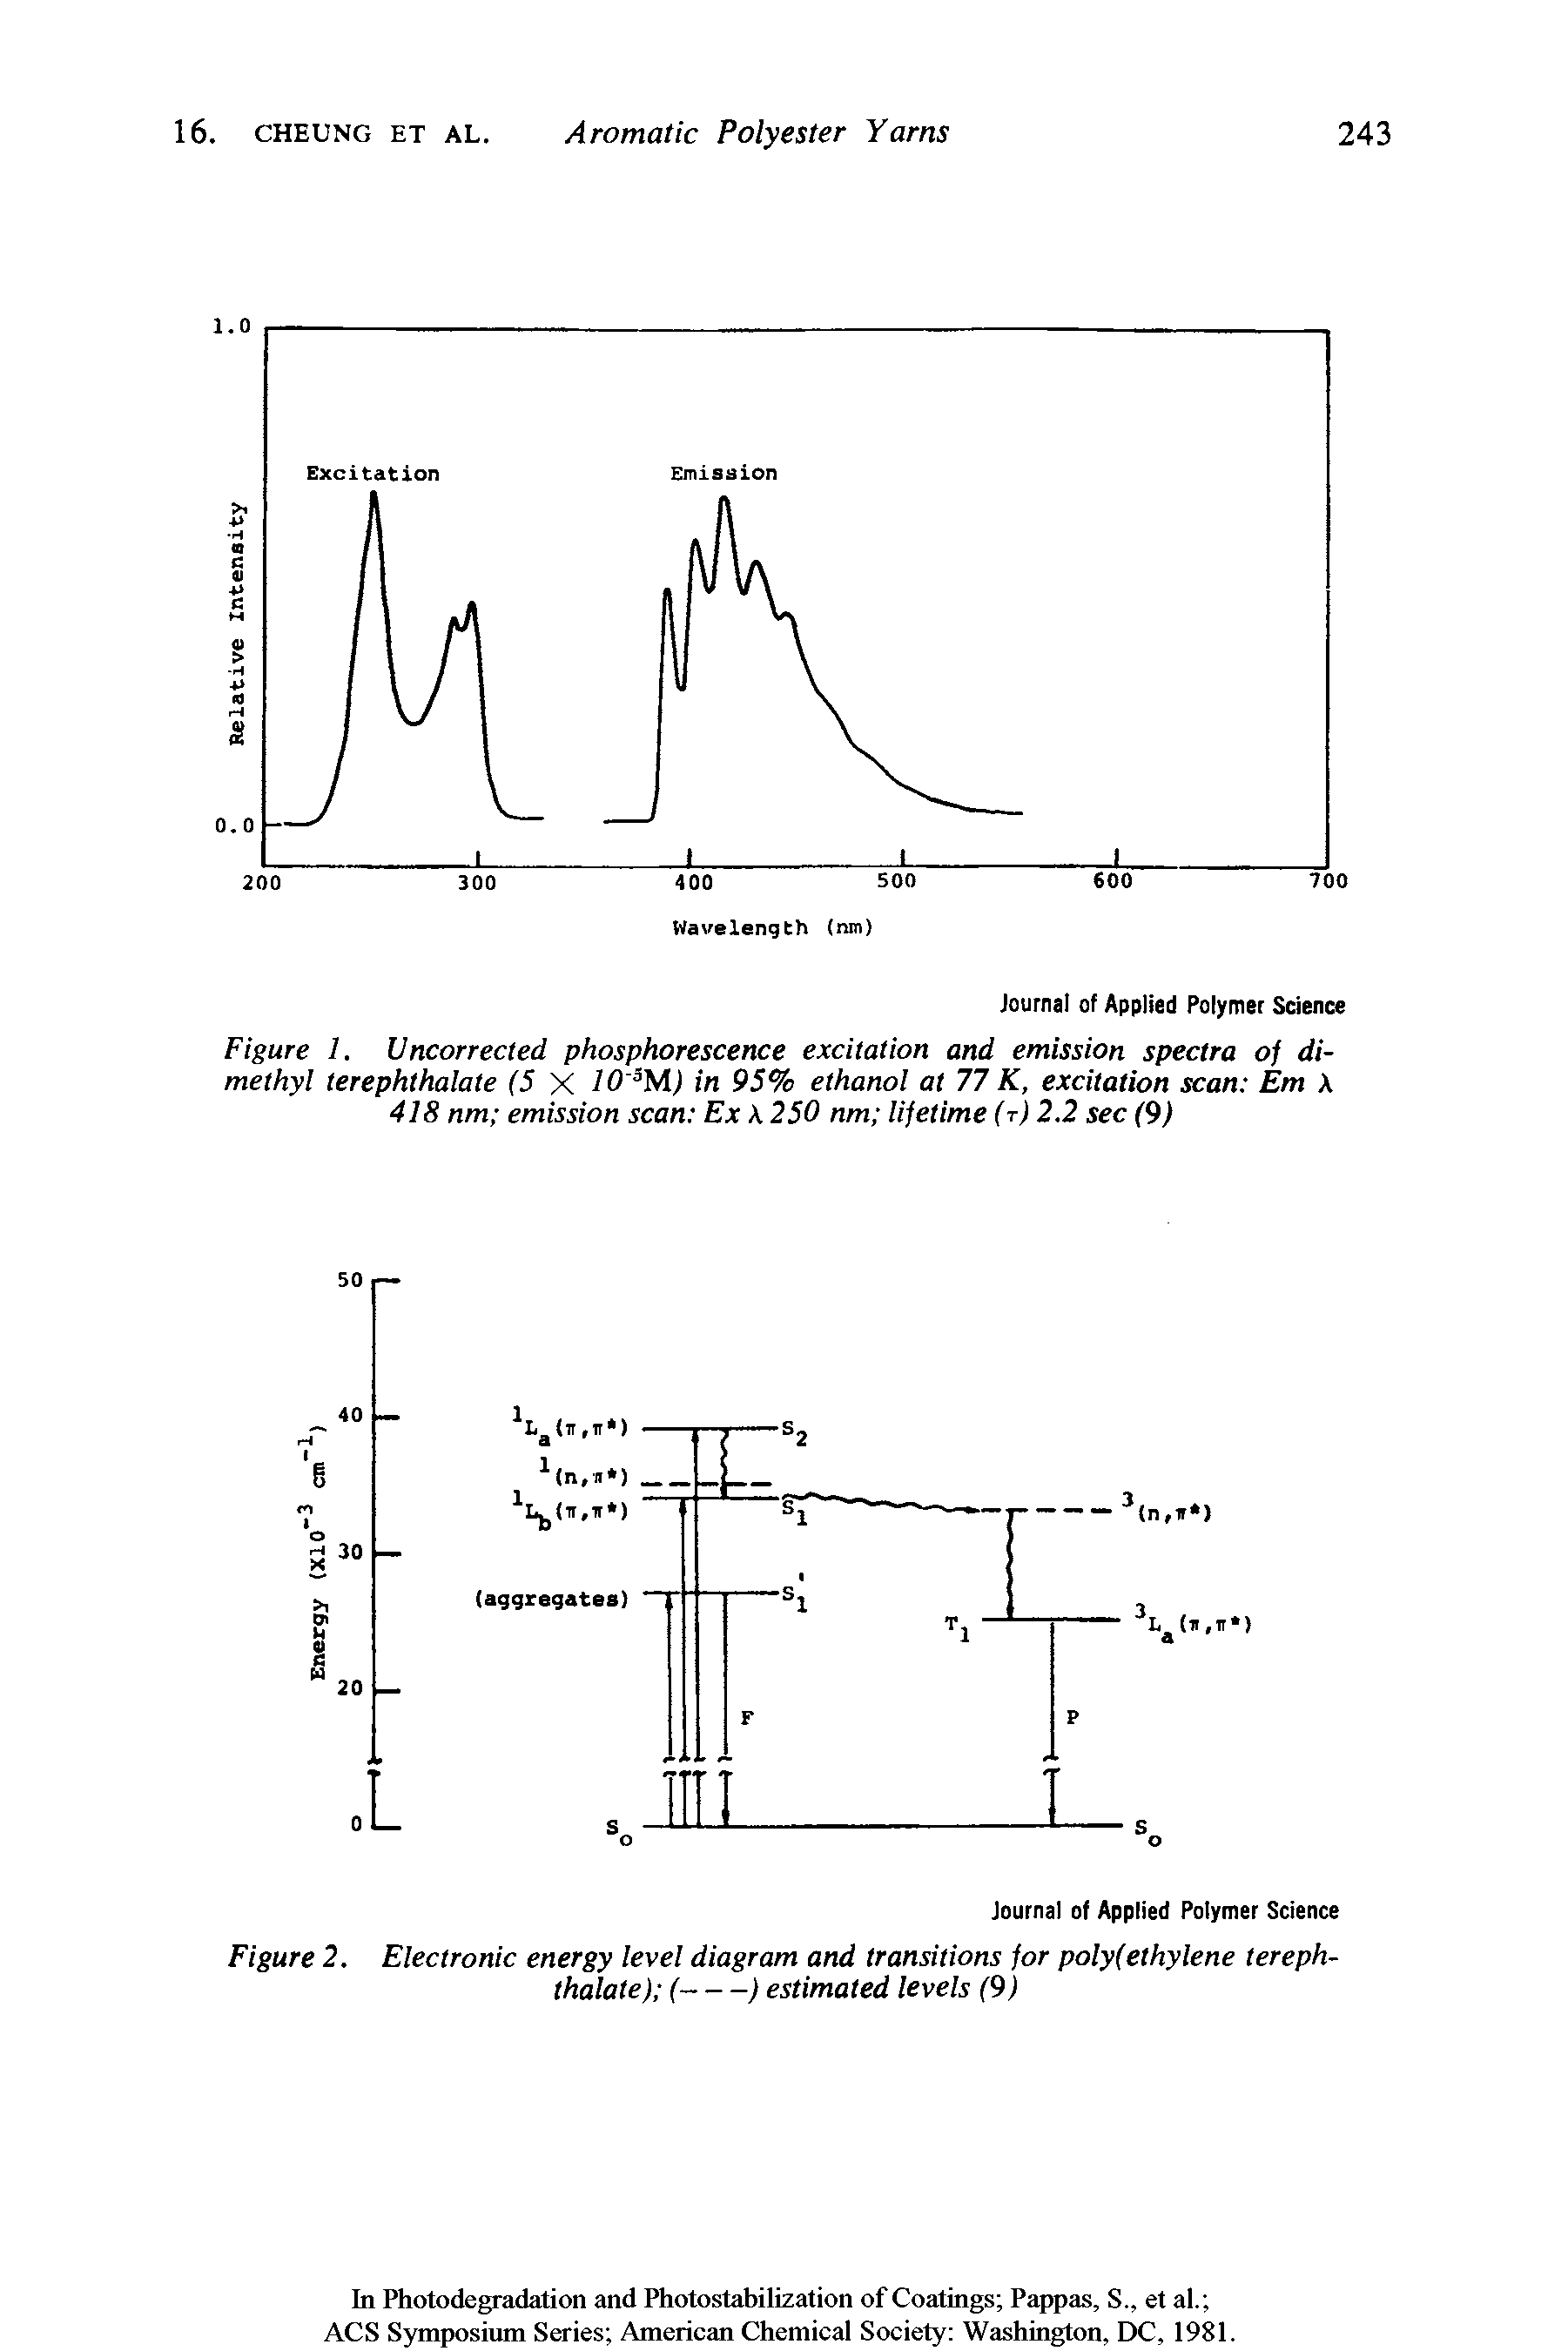 Figure 2. Electronic energy level diagram and transitions for poly(ethylene terephthalate) (--------------------------------) estimated levels (9)...